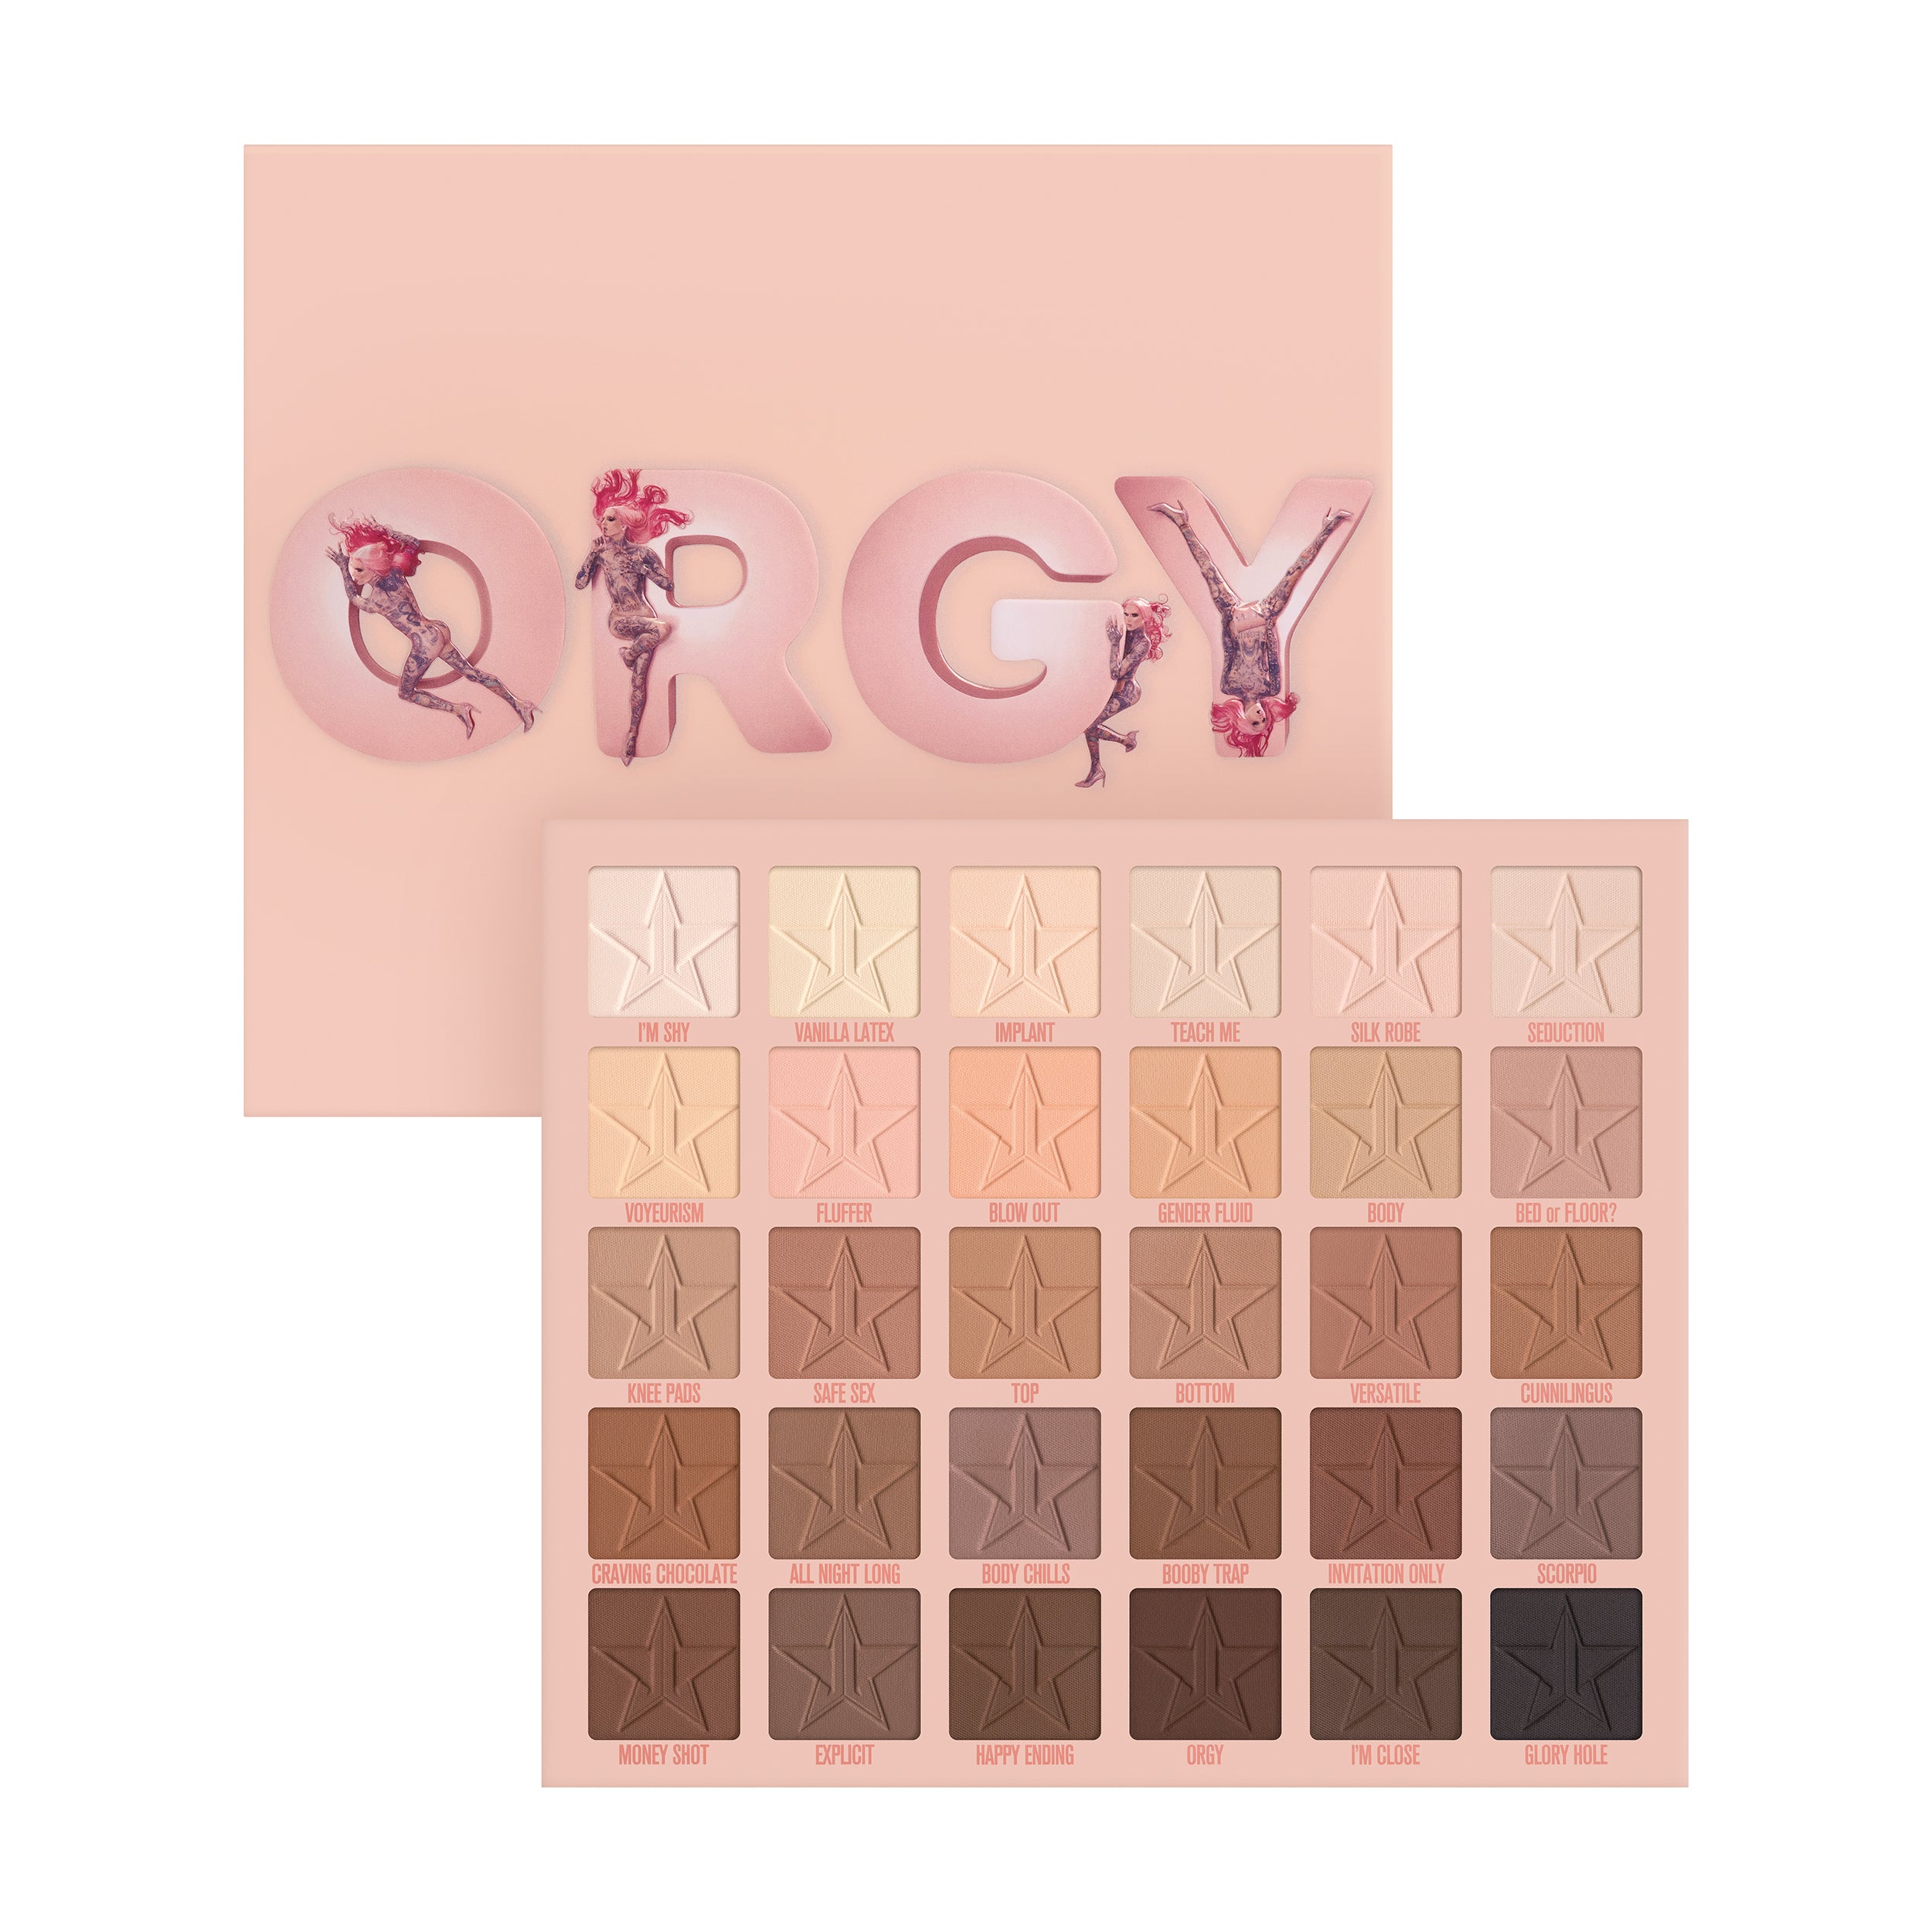 Orgy Eyeshadow Palette